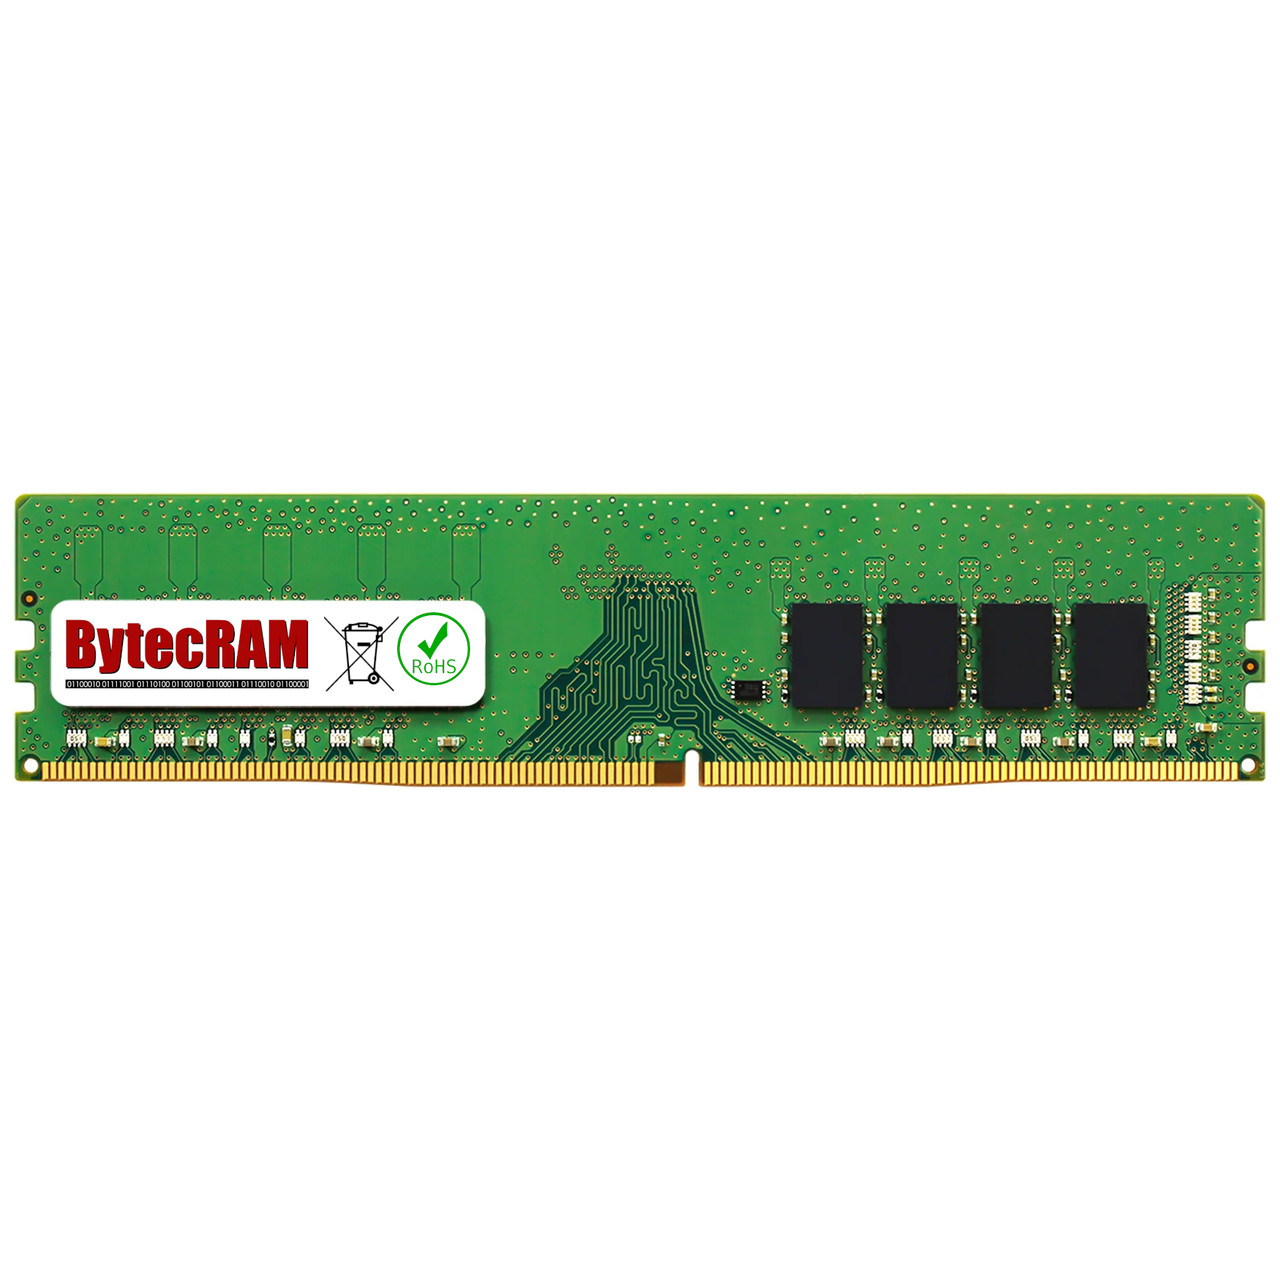 eBay*8GB Dell Precision Workstation R3930 DDR4 2666MHz UDIMM Memory RAM Upgrade